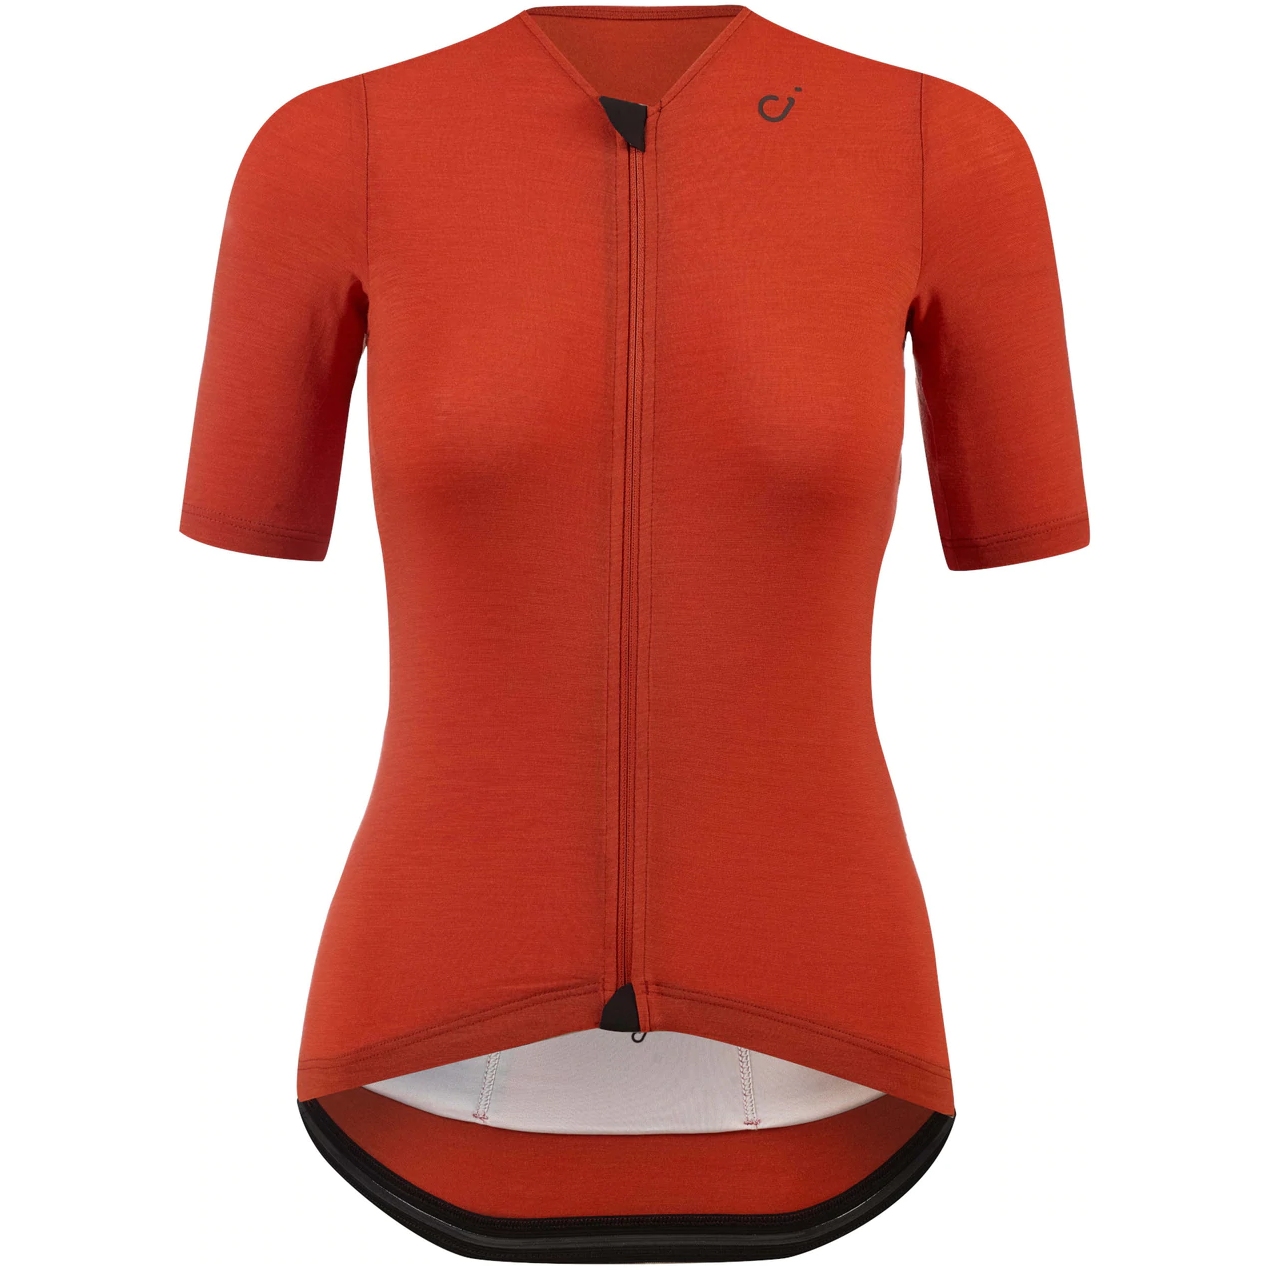 Produktbild von Velocio Concept Merino Damen Fahrradtrikot - Rust